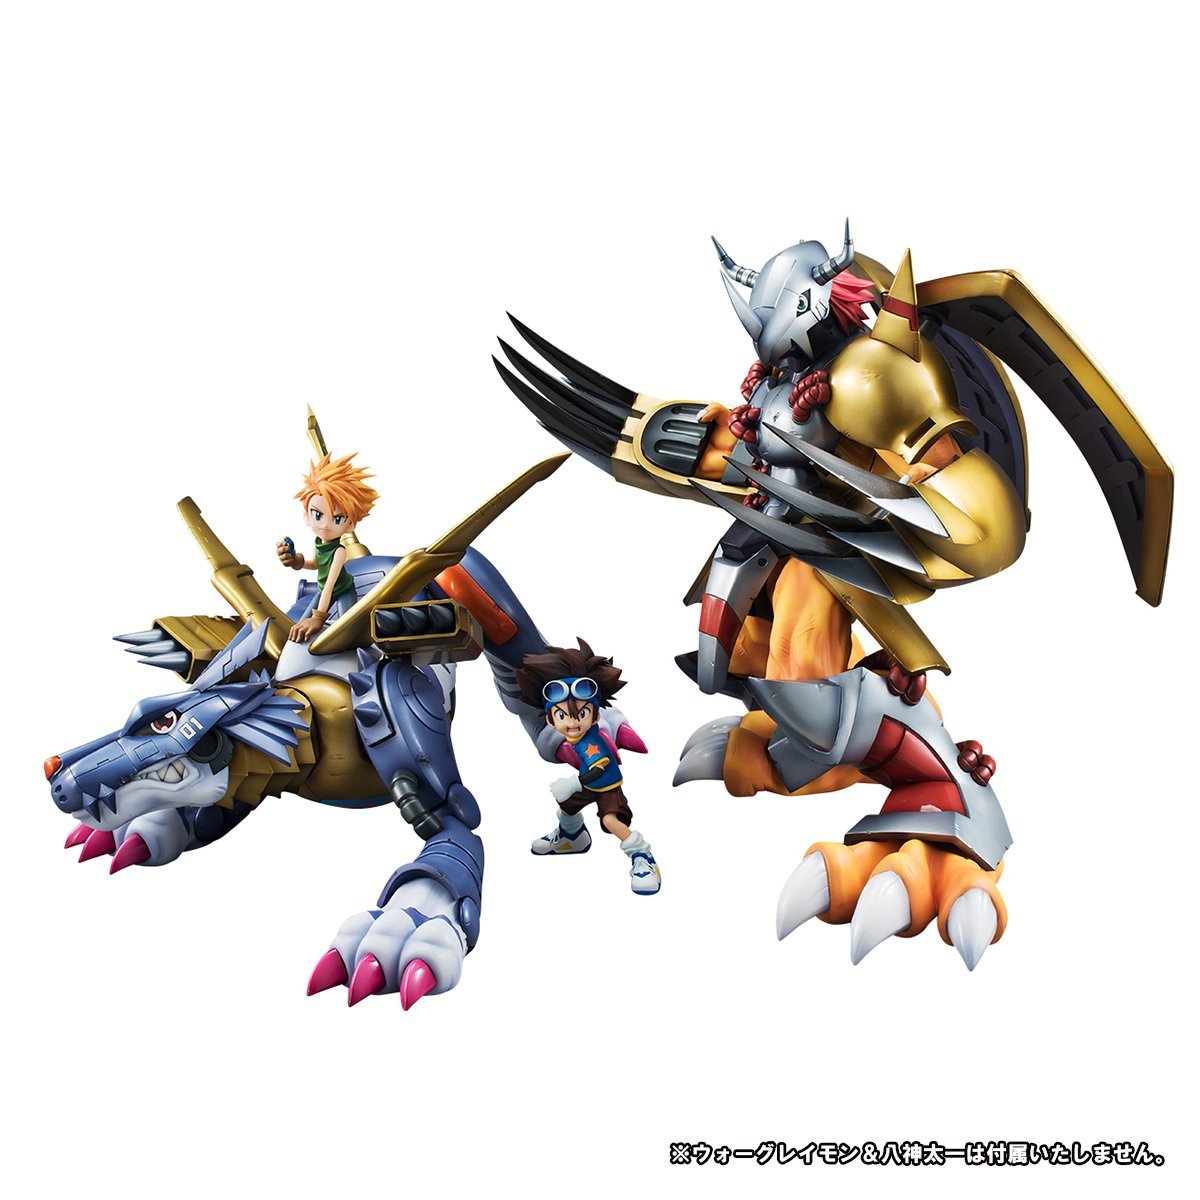 Digimon Adventure -Precious G.E.M. Series- &quot;Metal Garurumon and Yamato Ishida&quot; [Reissue]-MegaHouse-Ace Cards &amp; Collectibles